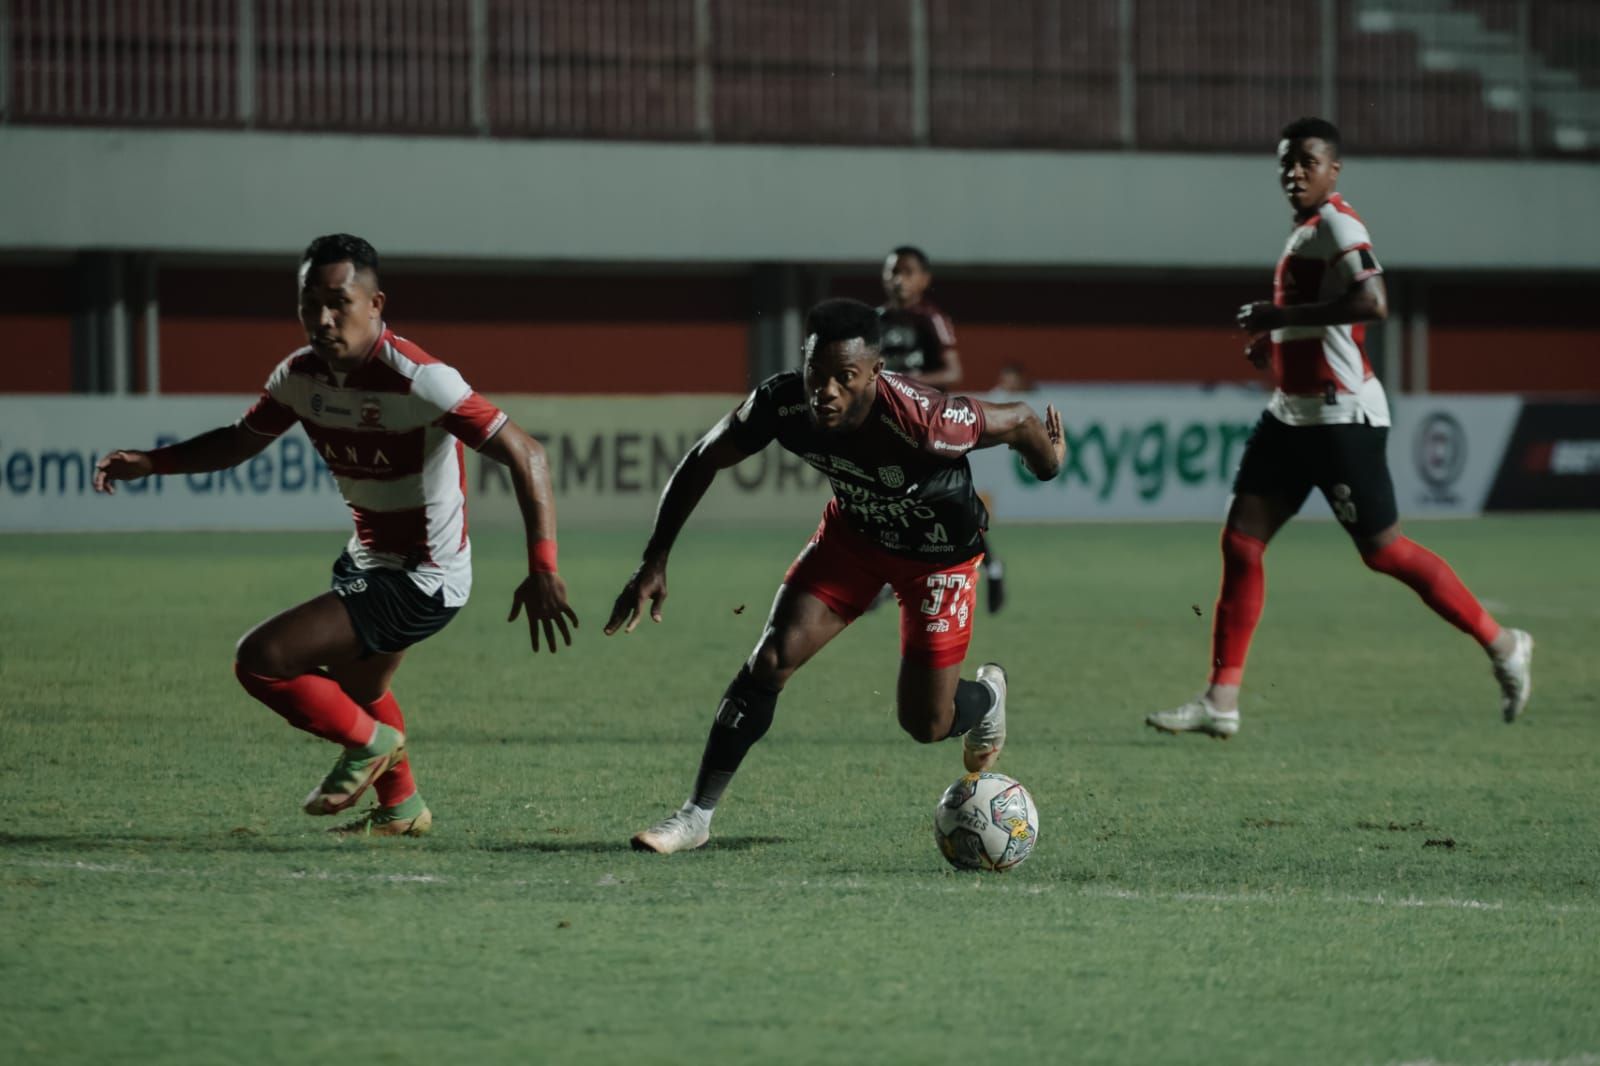 Simak jadwal pertandingan Bali United vs Madura United BRI Liga 1.